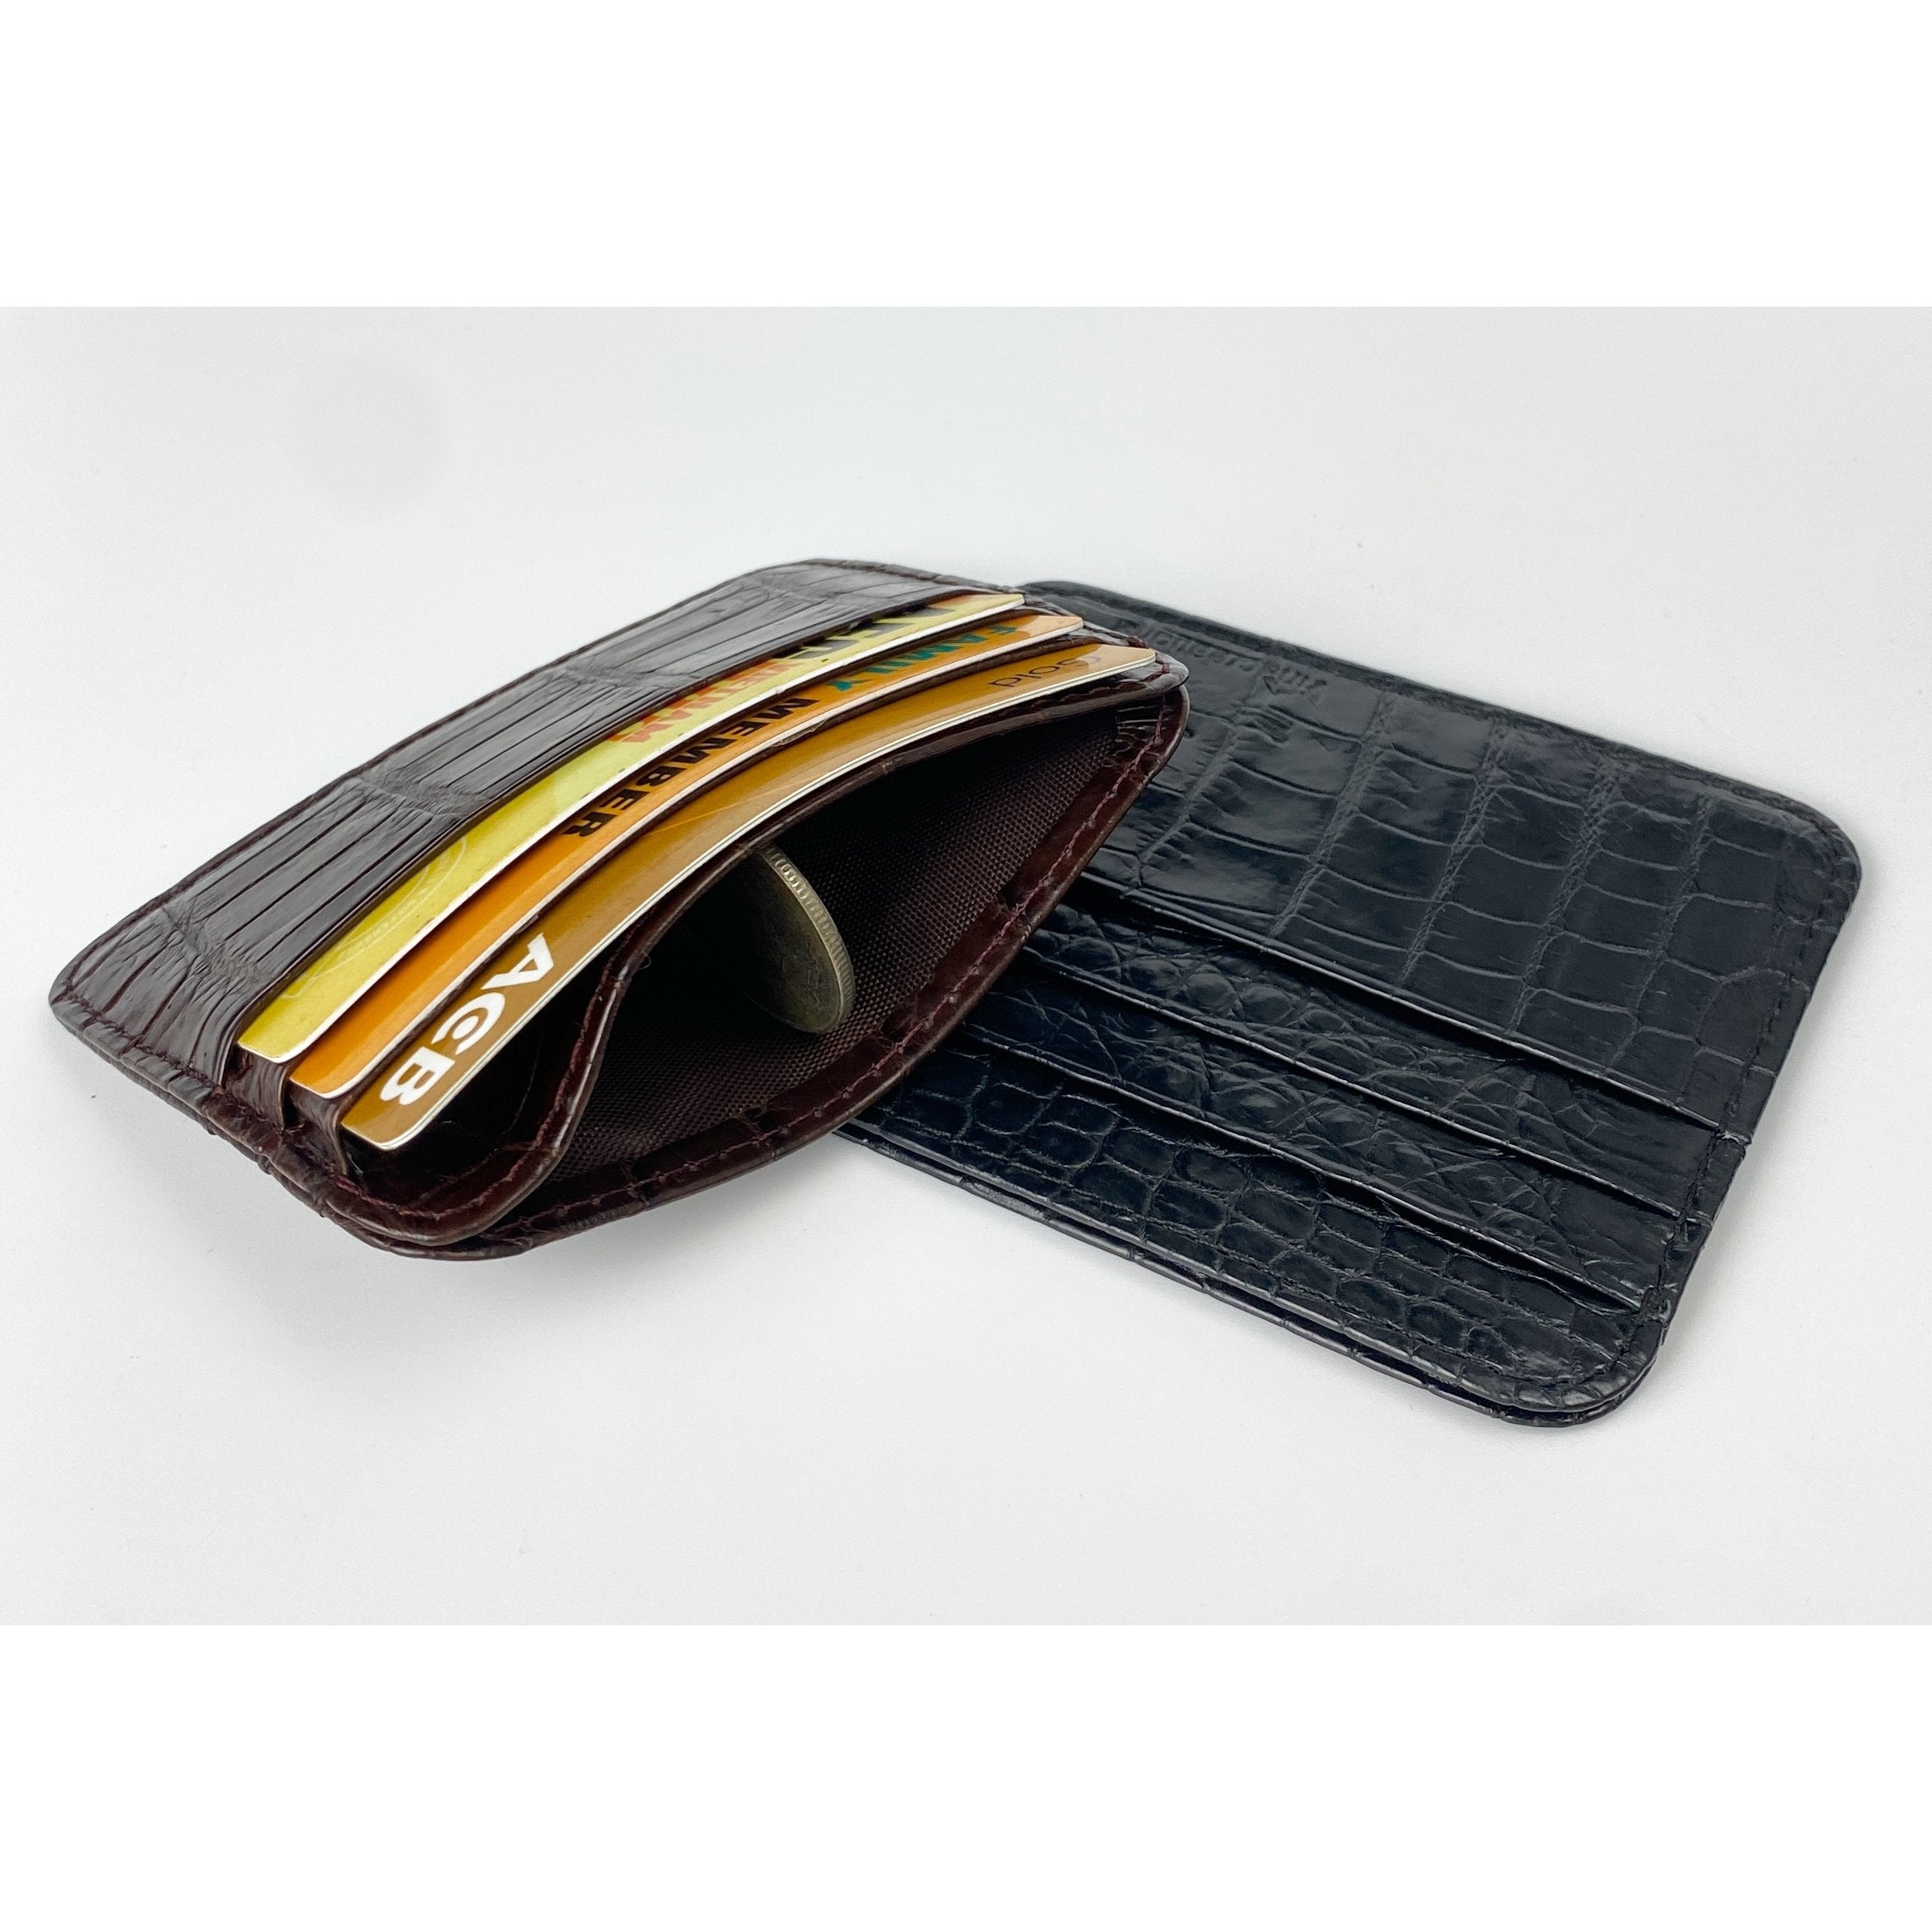 Dark Brown Alligator Leather Credit Card Holder | RFID Blocking | BROWN-CARD-12 - Vinacreations